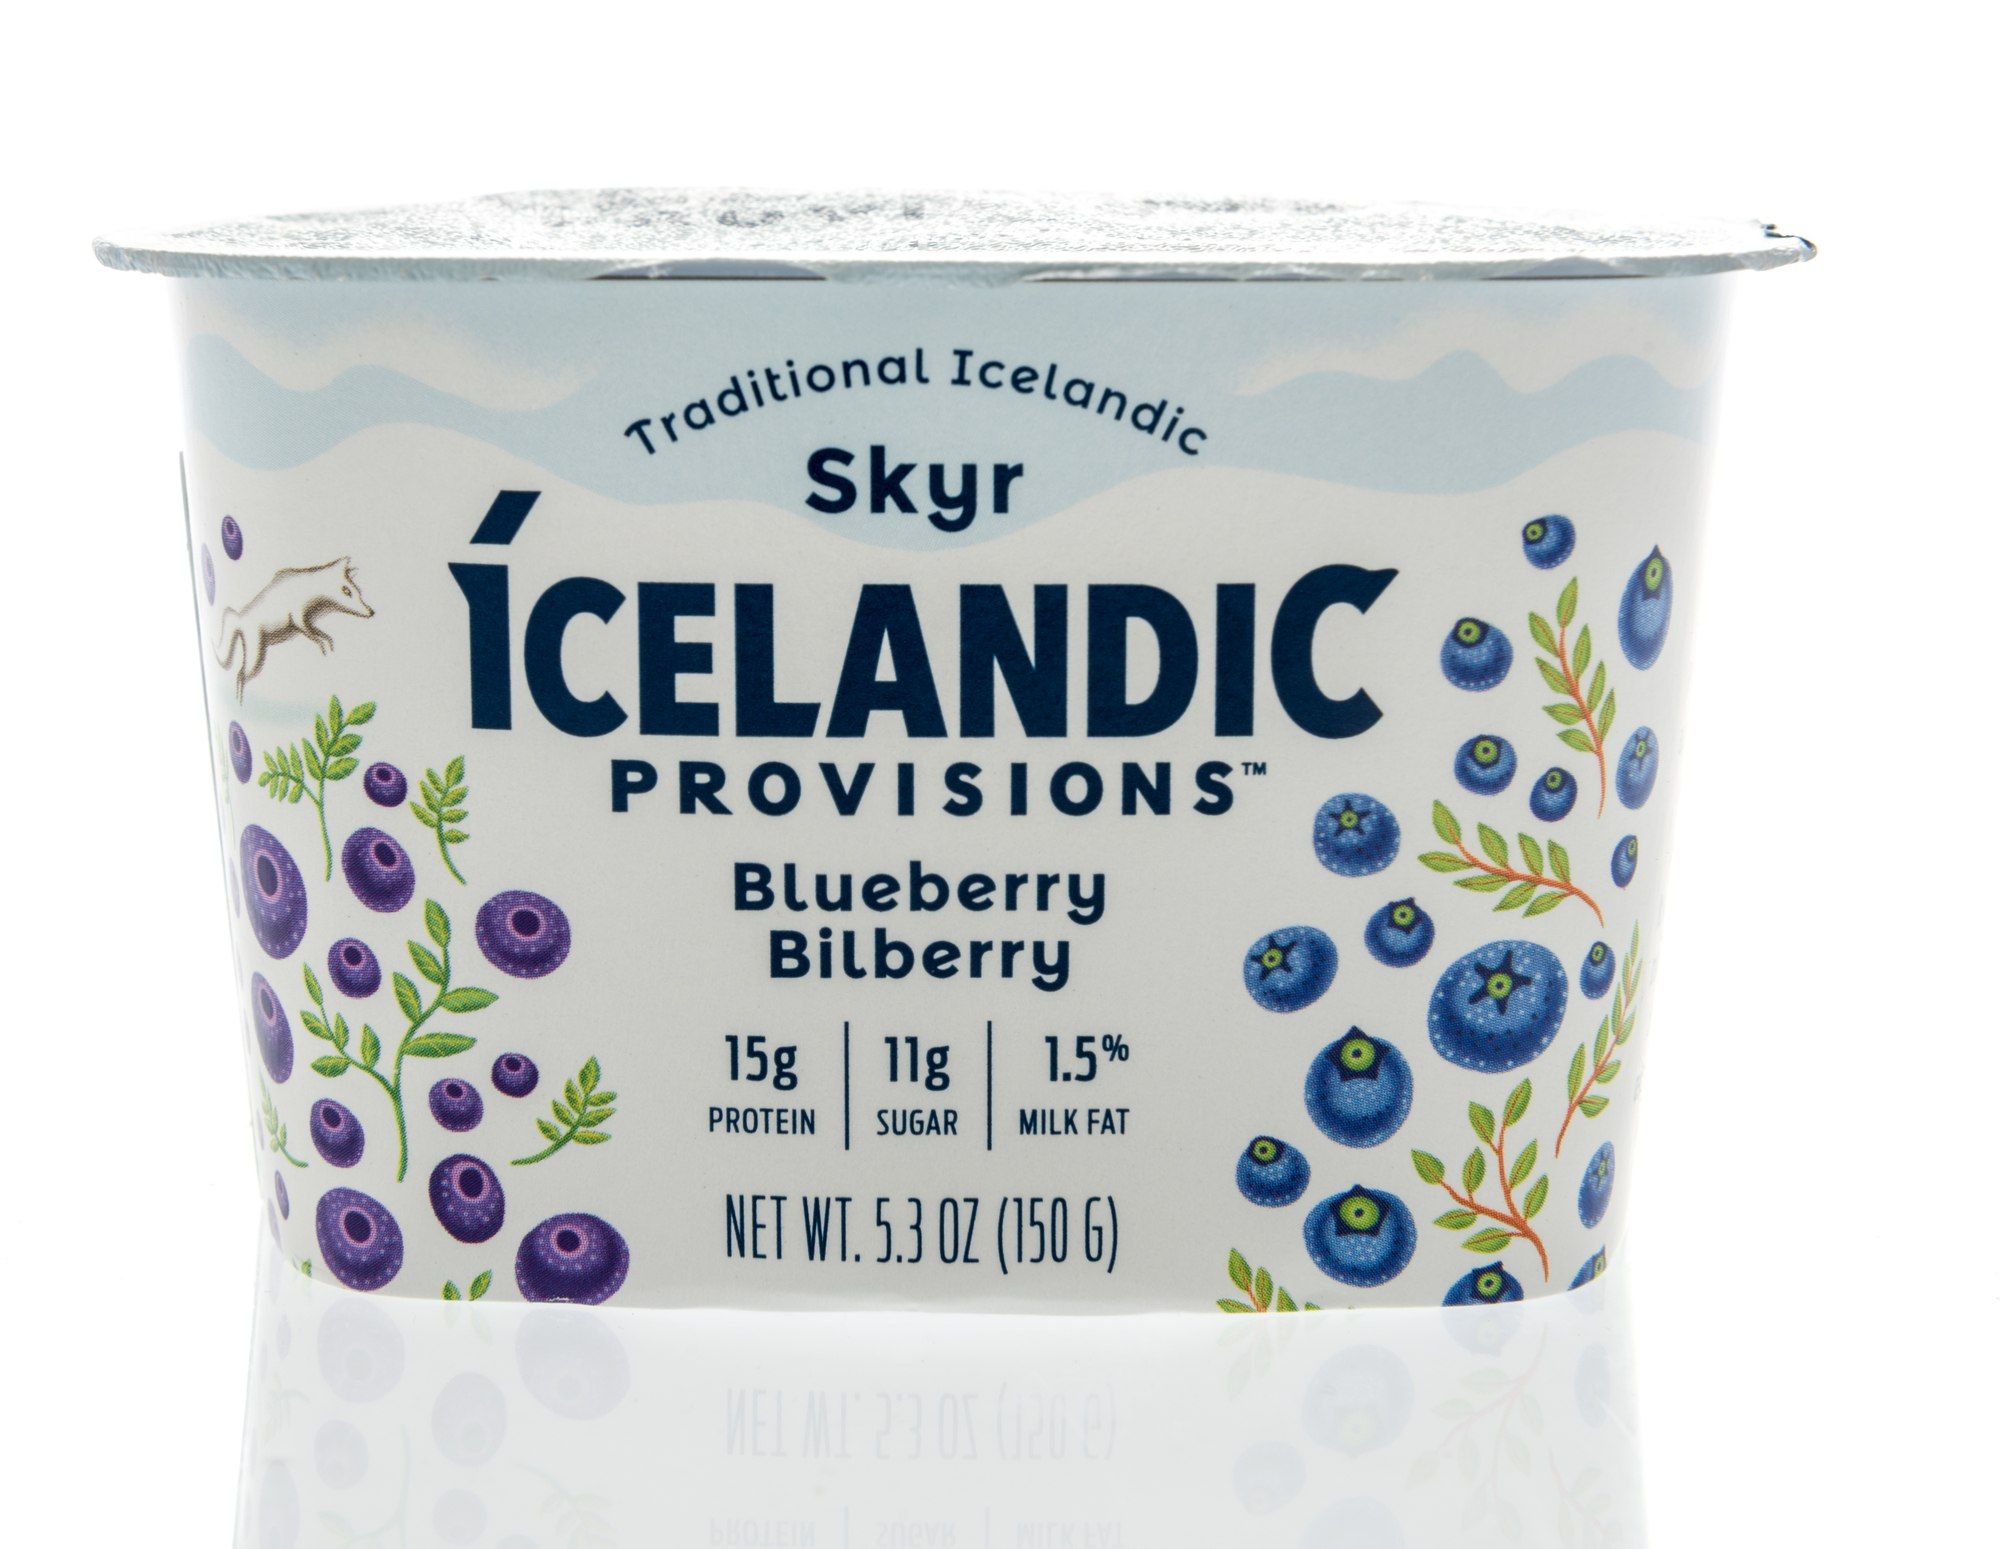 Class action lawsuit claims Icelandic yogurt misleading advertised